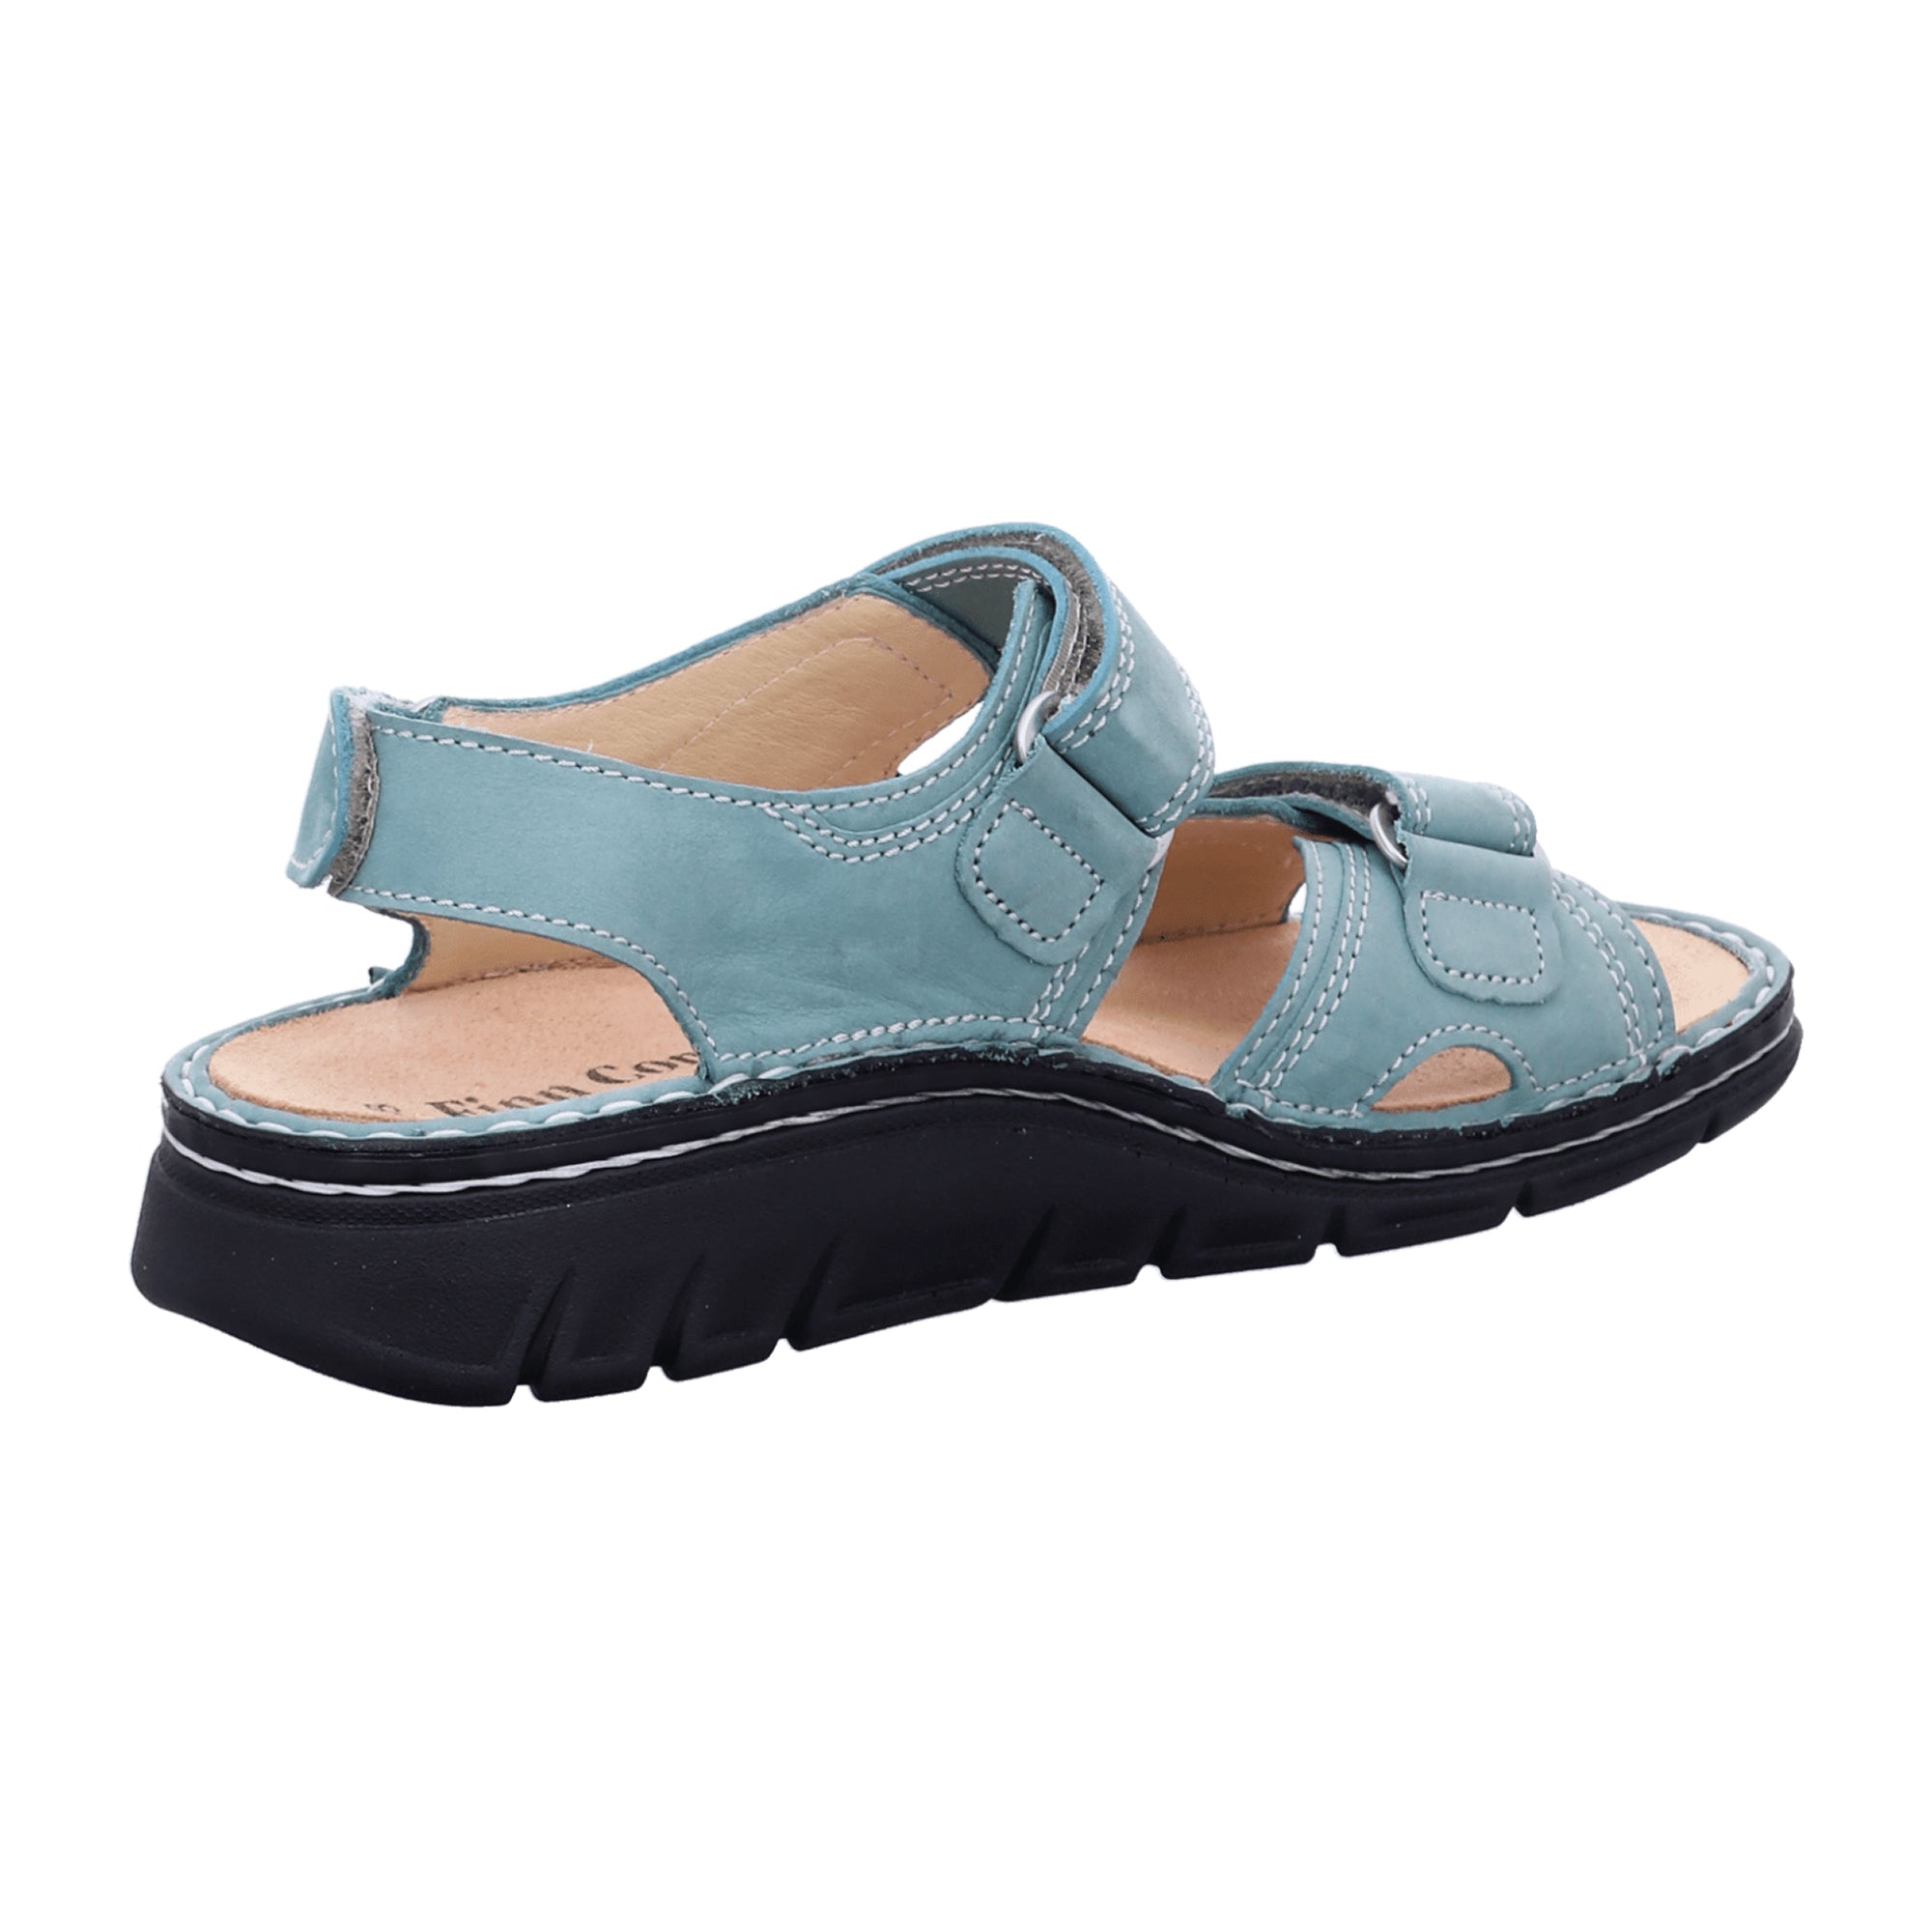 Finn Comfort Wanaka 81540 Women's Comfortable Walking Shoes - Stylish Navy Blue